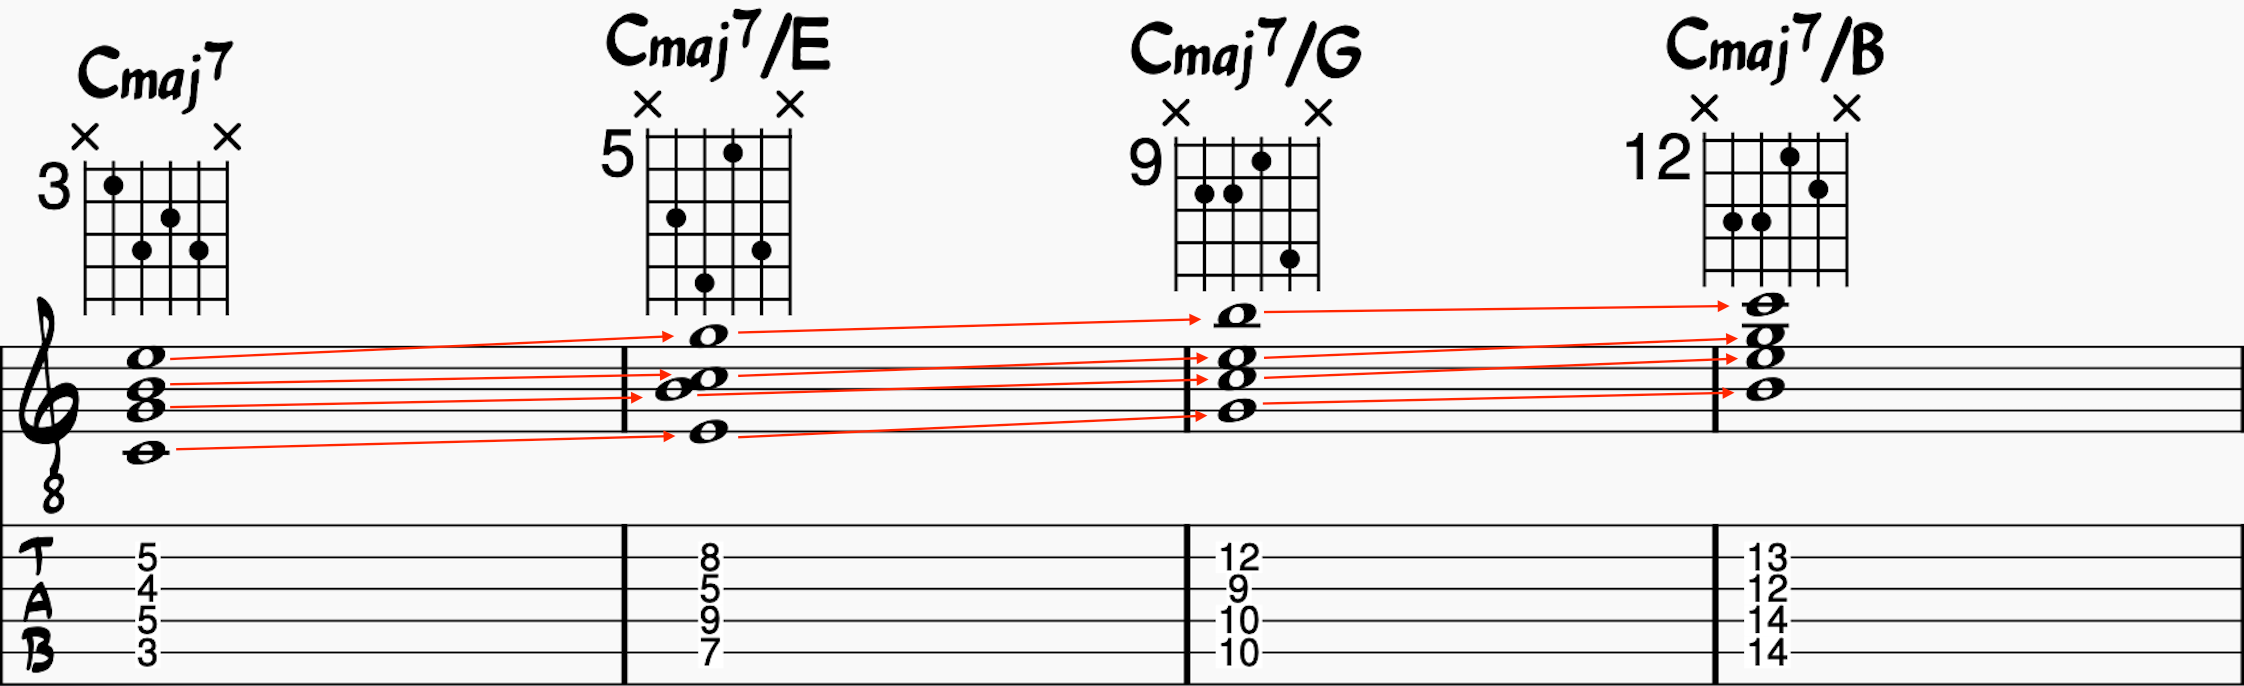 Jazz Guitar chords: Cmaj7 moving through all chord inversions 